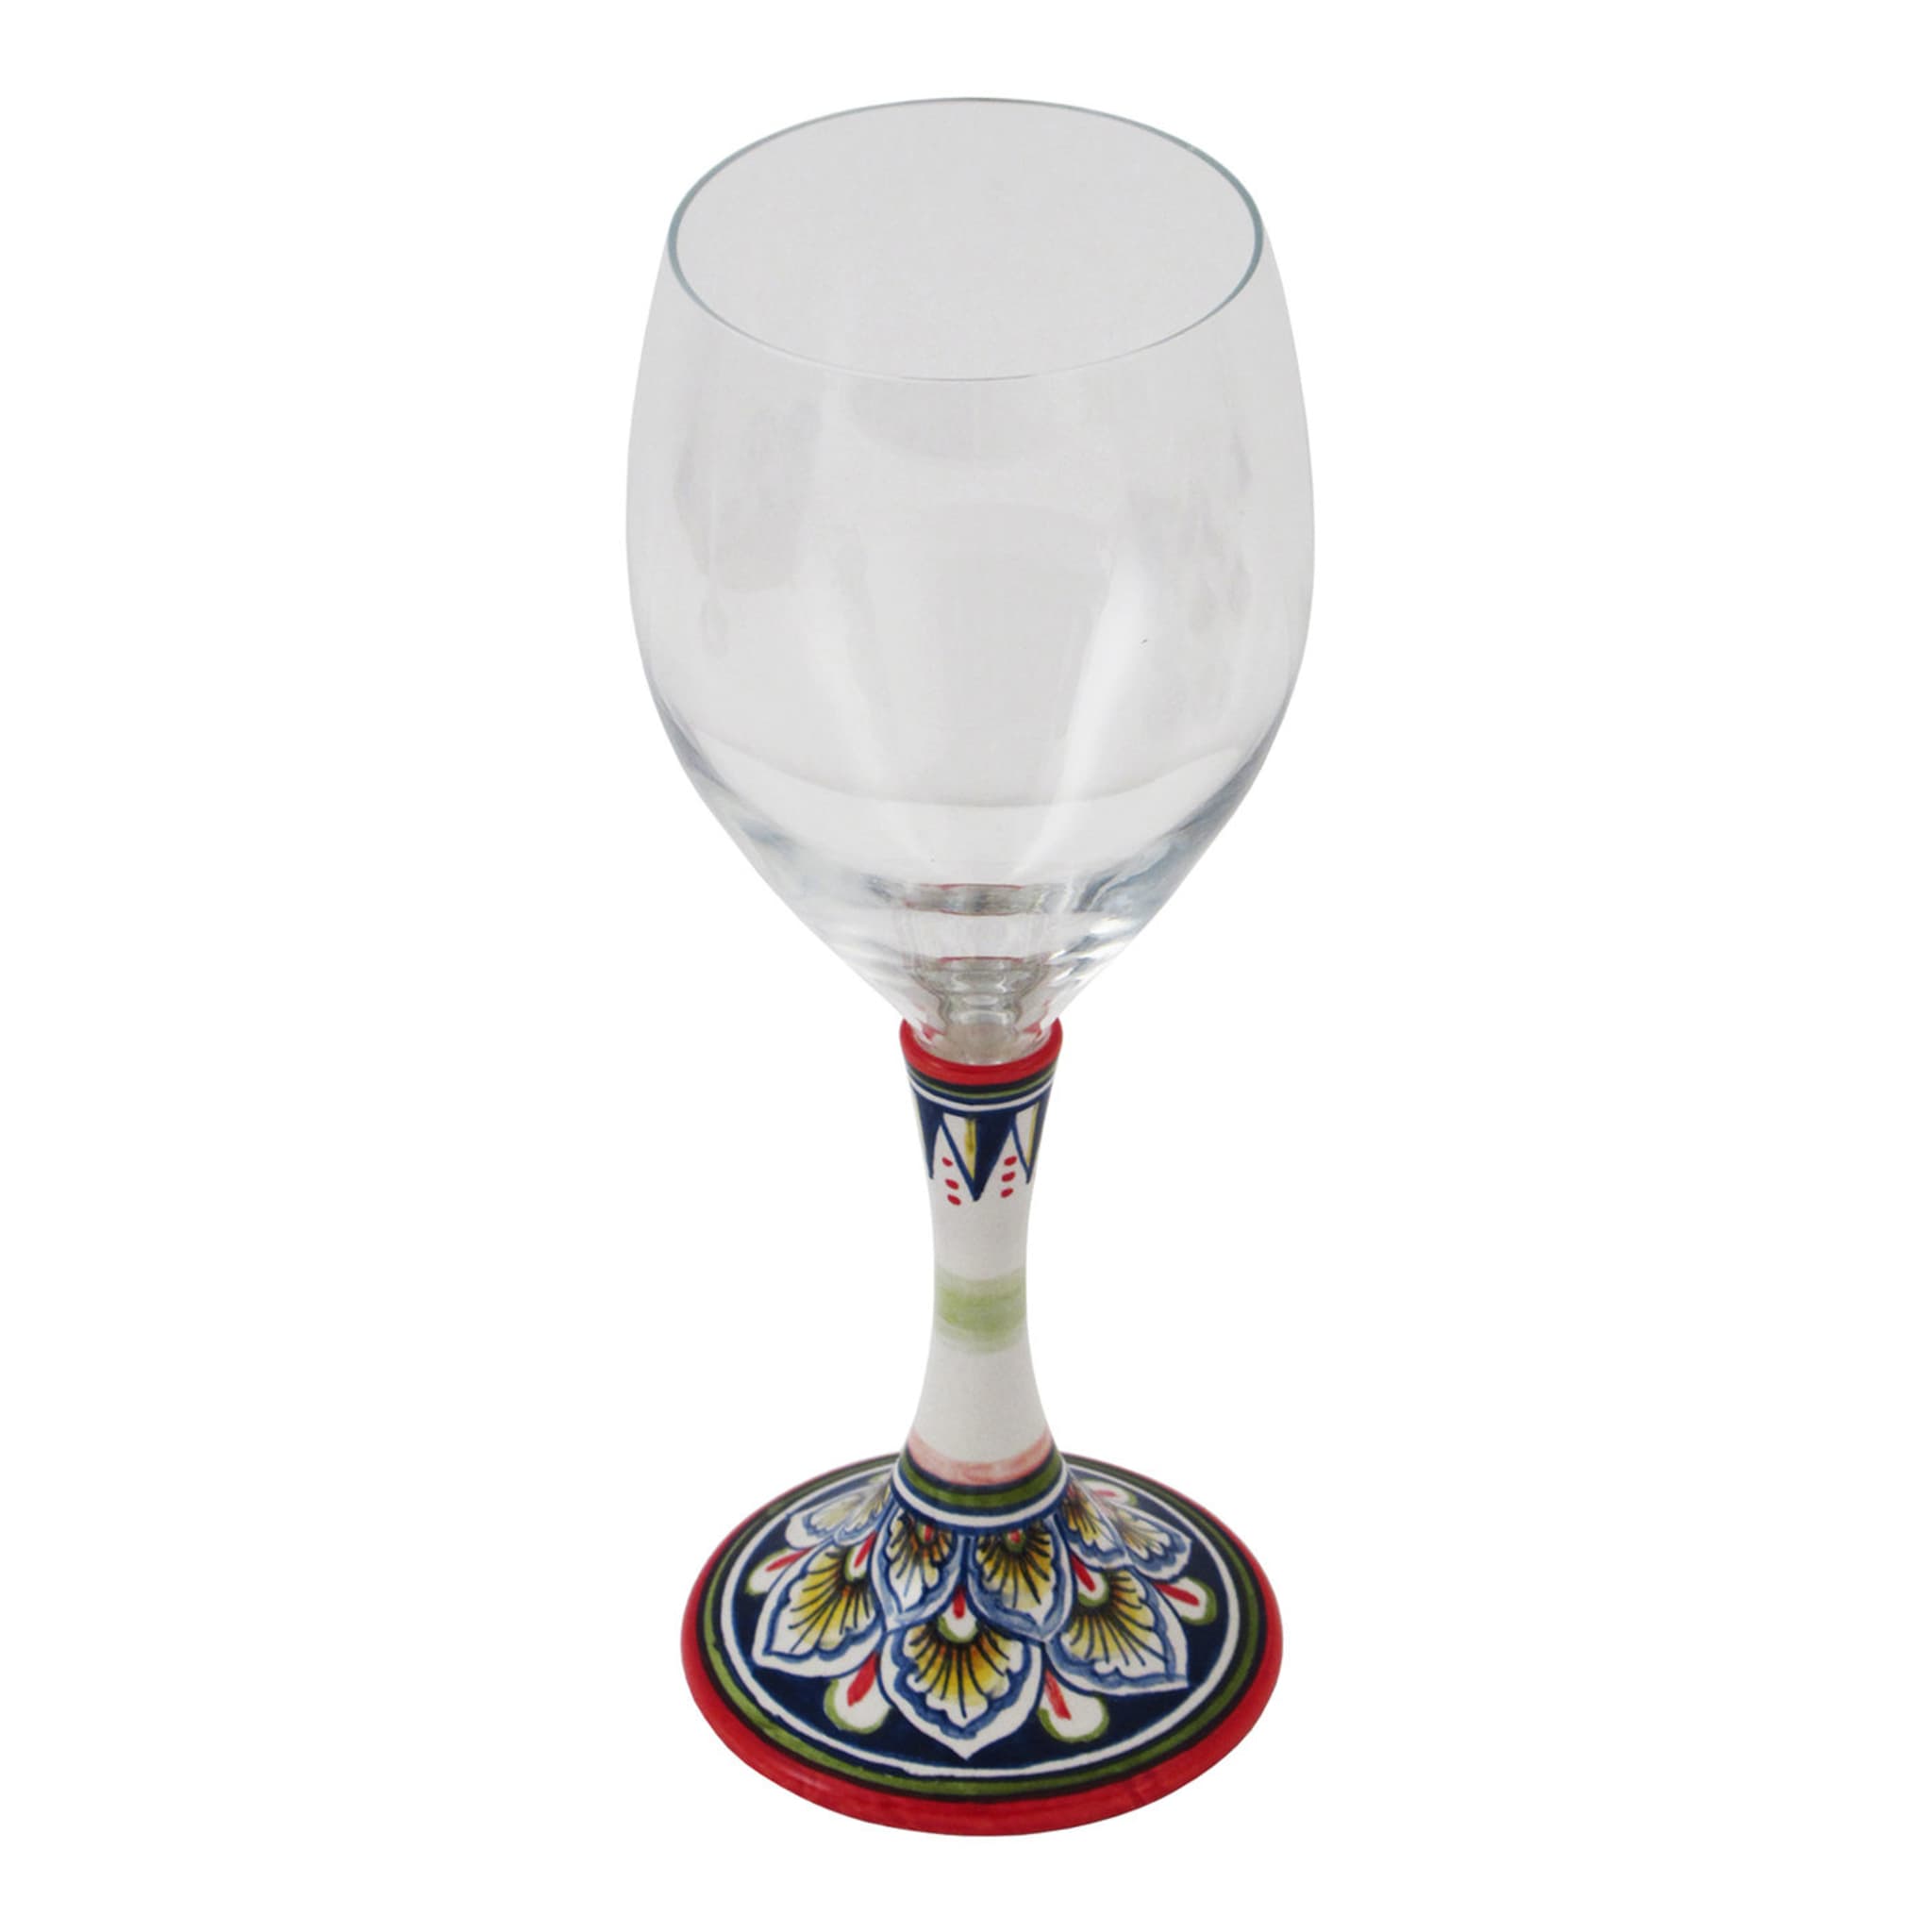 Set of 2 Medium Floral Wine Glasses #1 - Alternative view 1